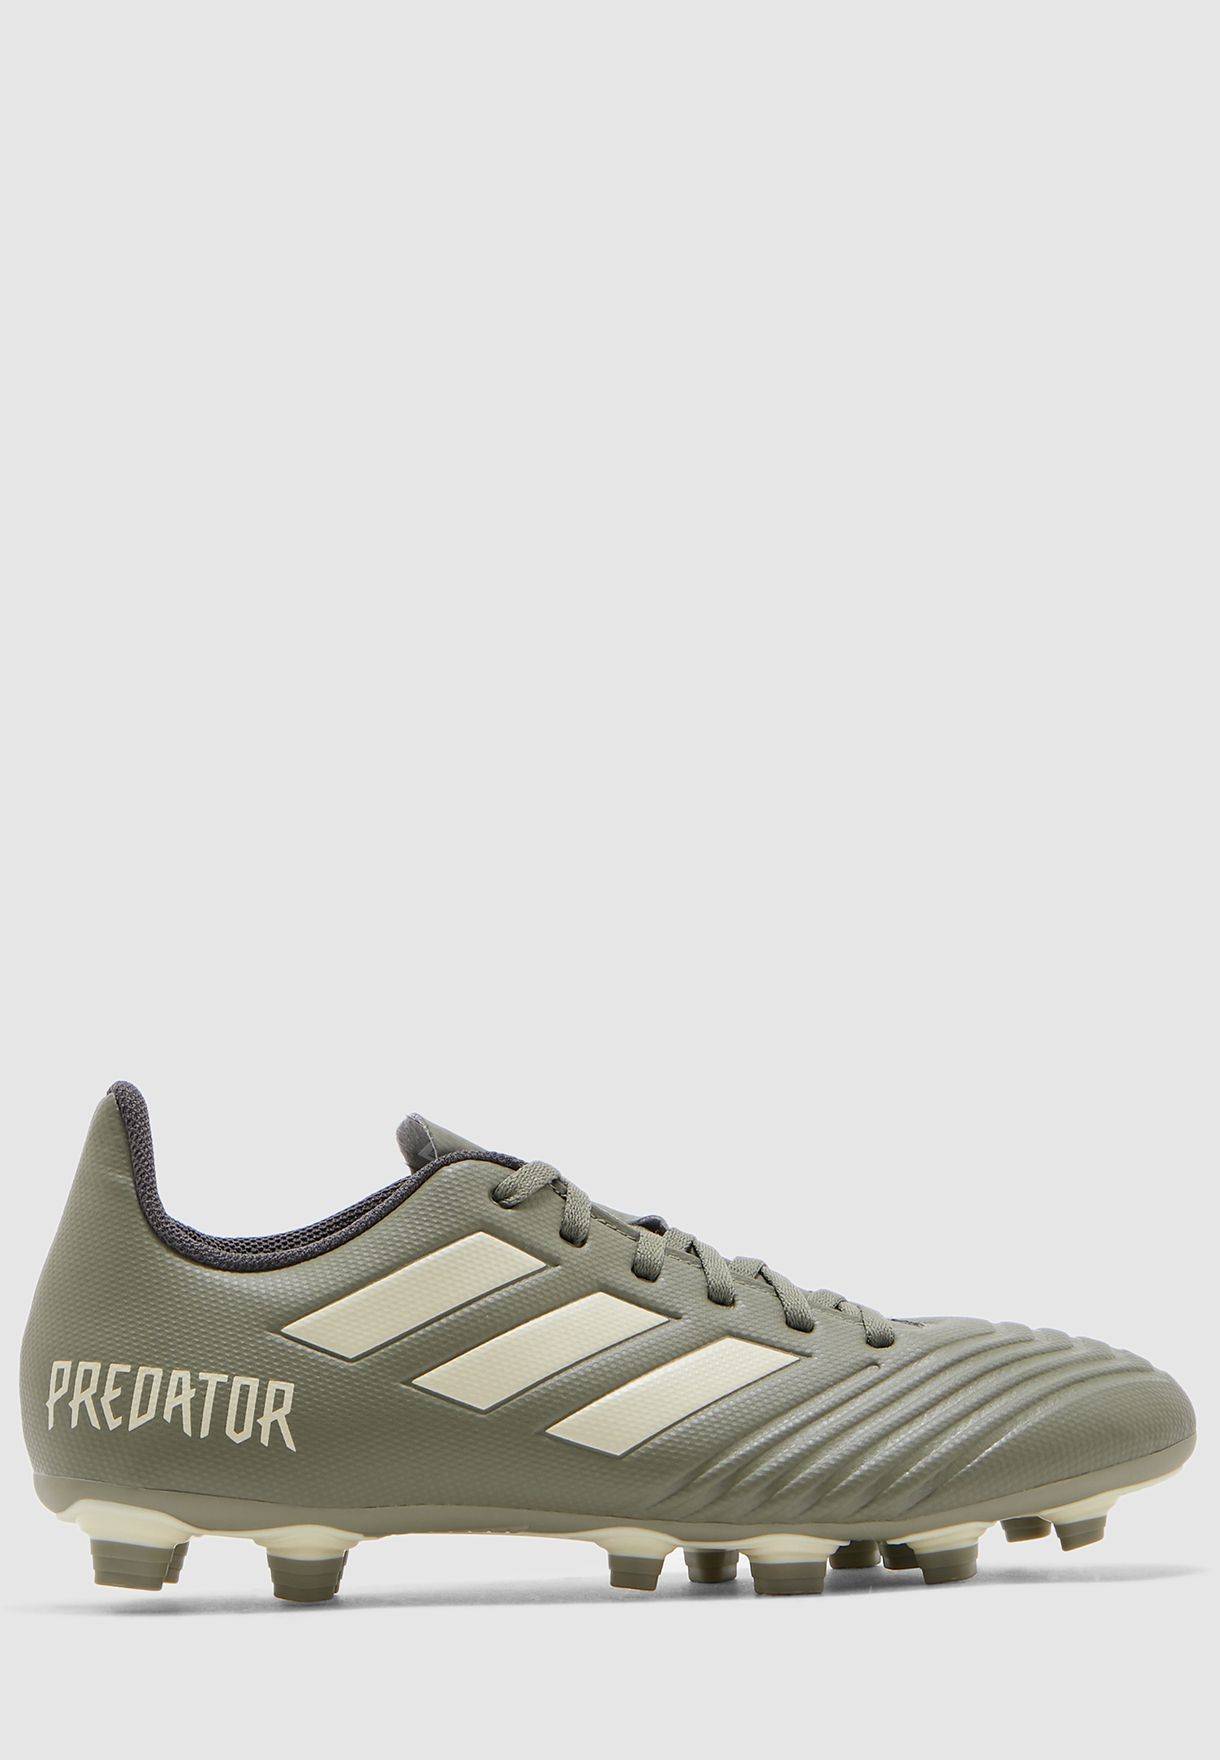 adidas predator 19.4 firm ground soccer cleats